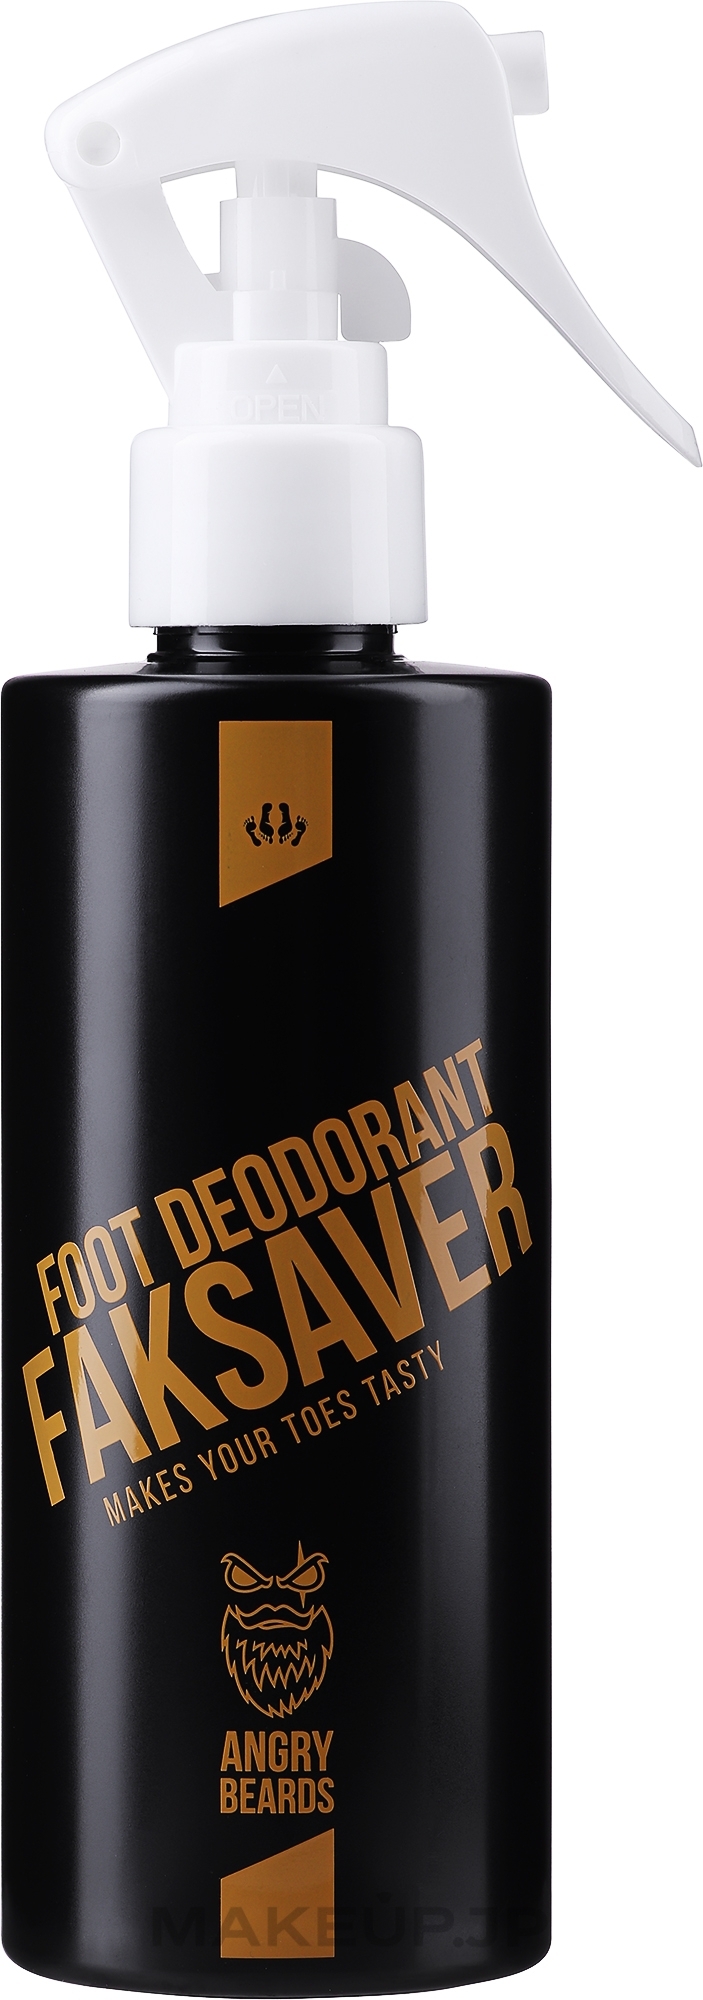 Foot Deodorant - Angry Beards Faksaver Foot Deodorant — photo 200 ml